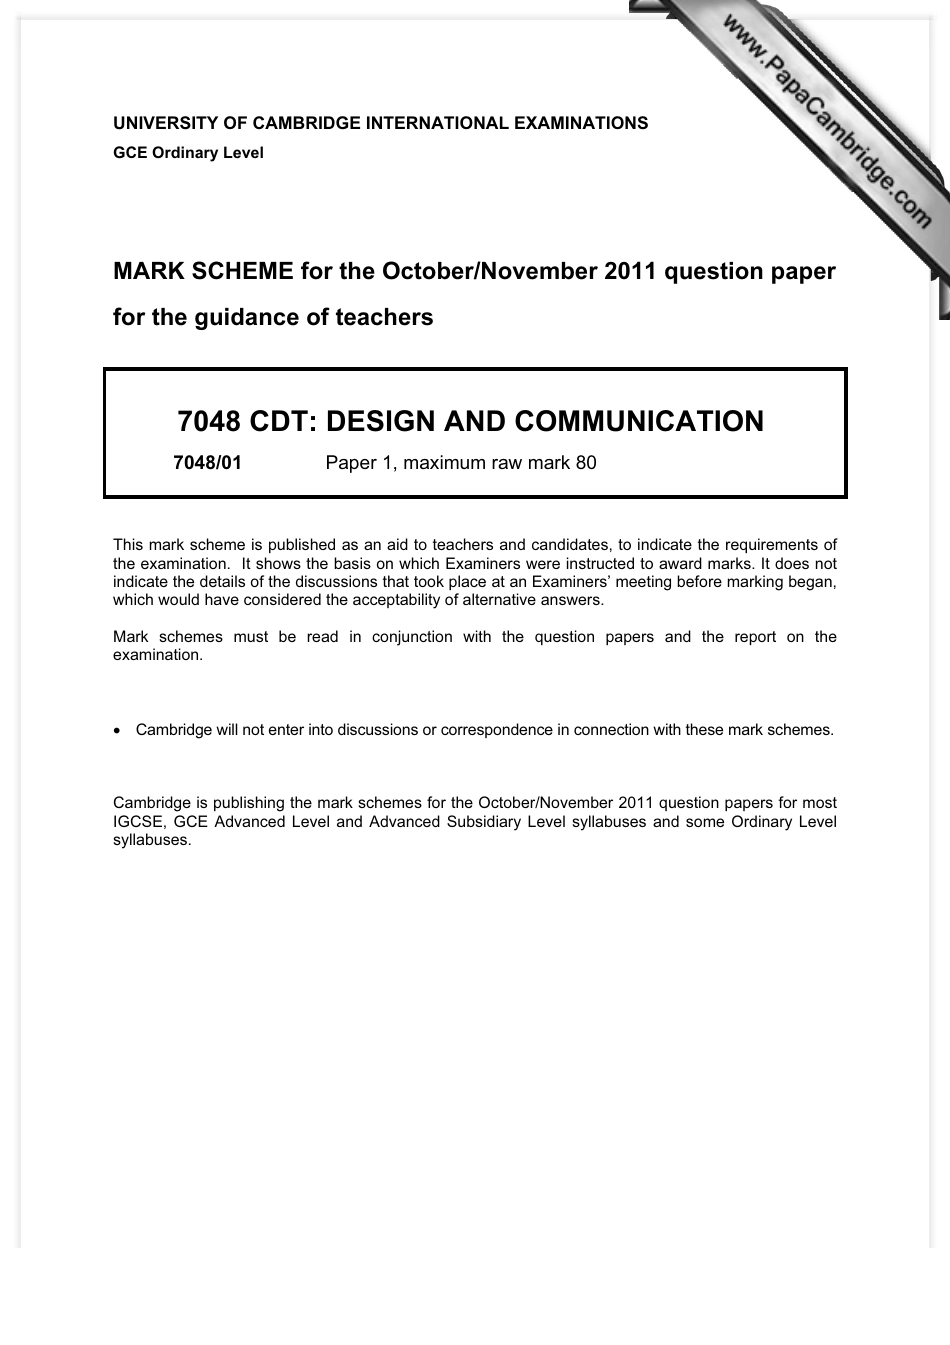 October / November 2011 University of Cambridge International Examinations 7048 Cdt: Design and Communication Paper 1 - Mark Scheme, Page 1